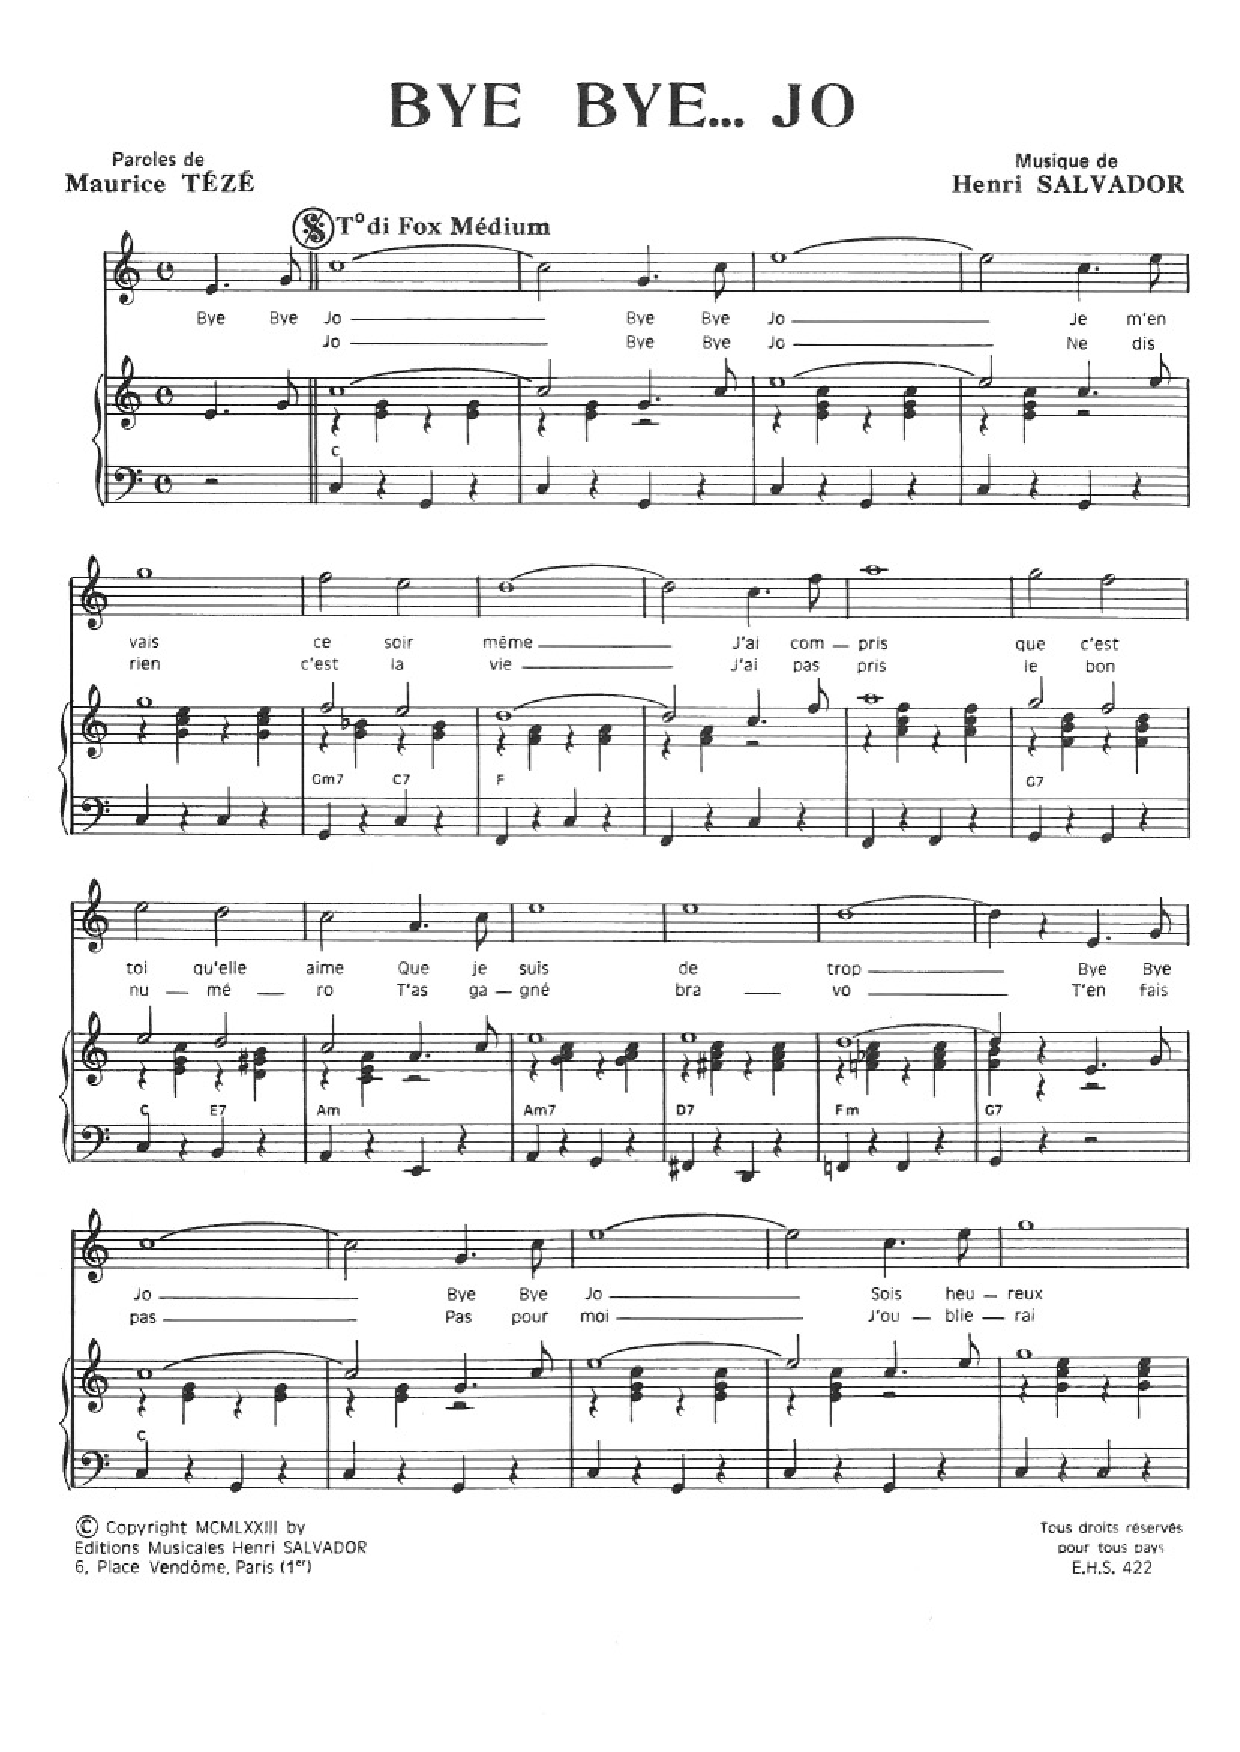 Henri Salvador Bye Bye Joe Sheet Music Notes & Chords for Piano & Vocal - Download or Print PDF